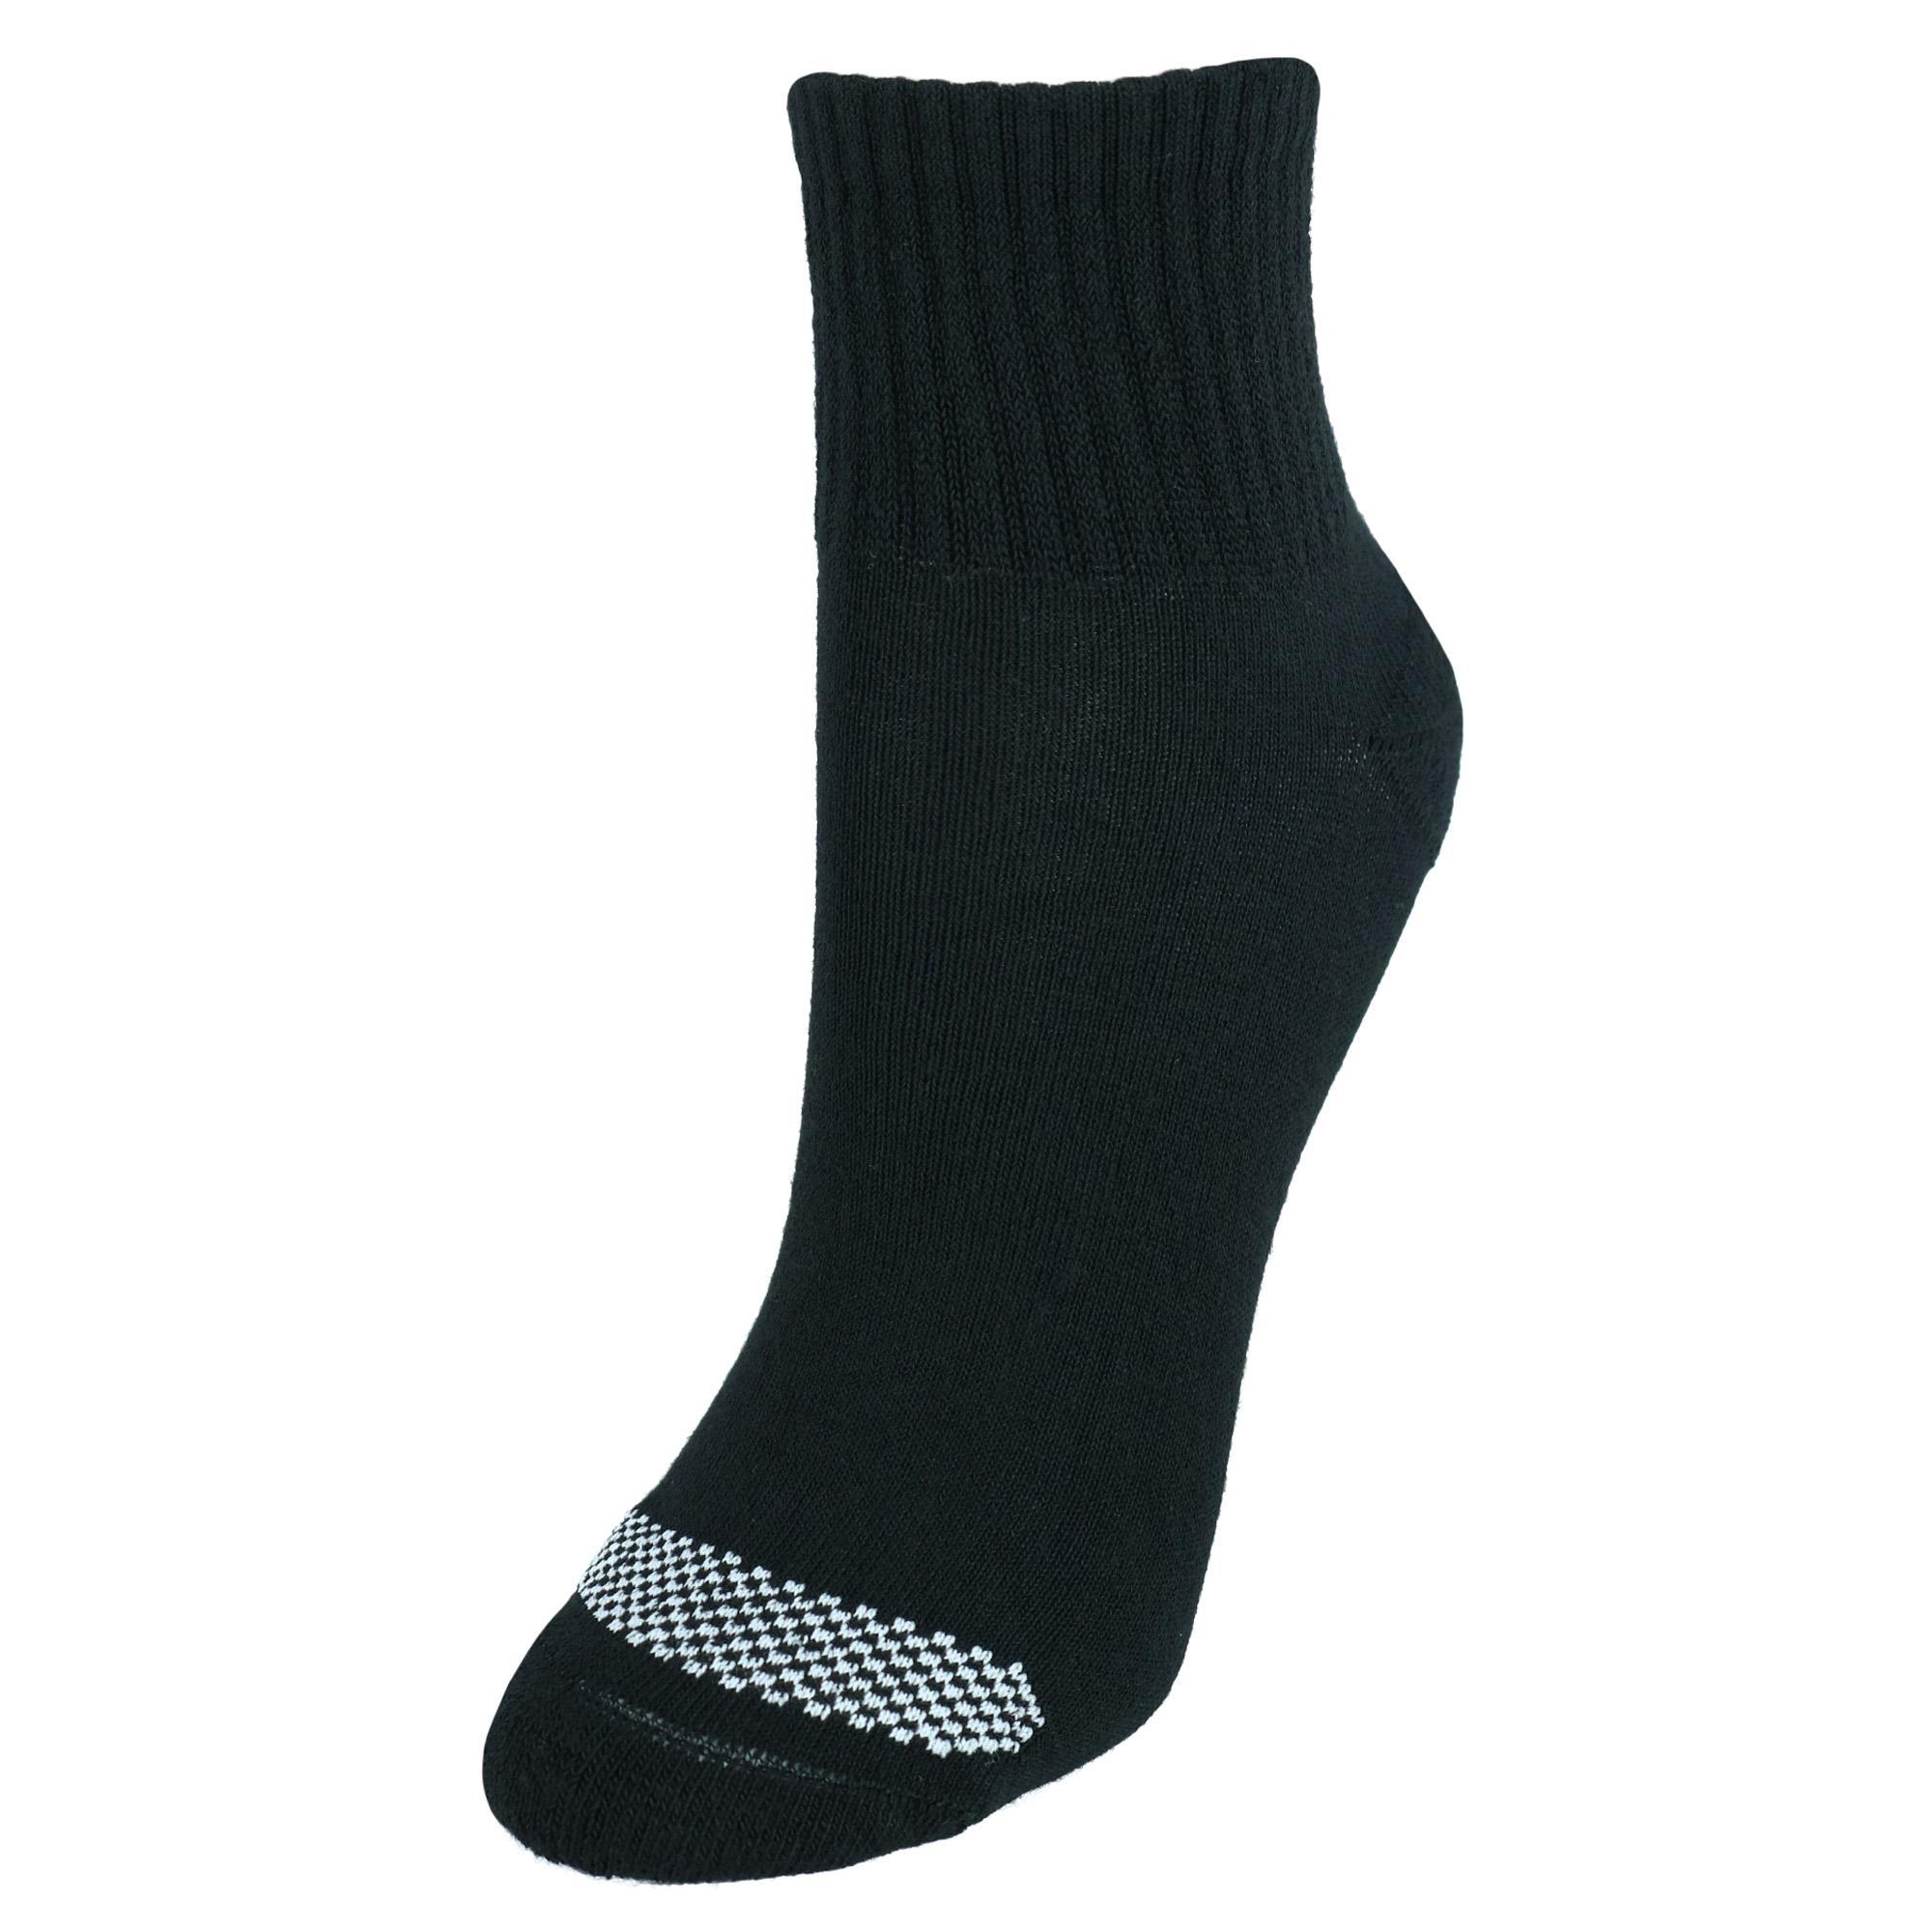 Hanes Women's Cool Comfort Ankle Socks (6 Pack)